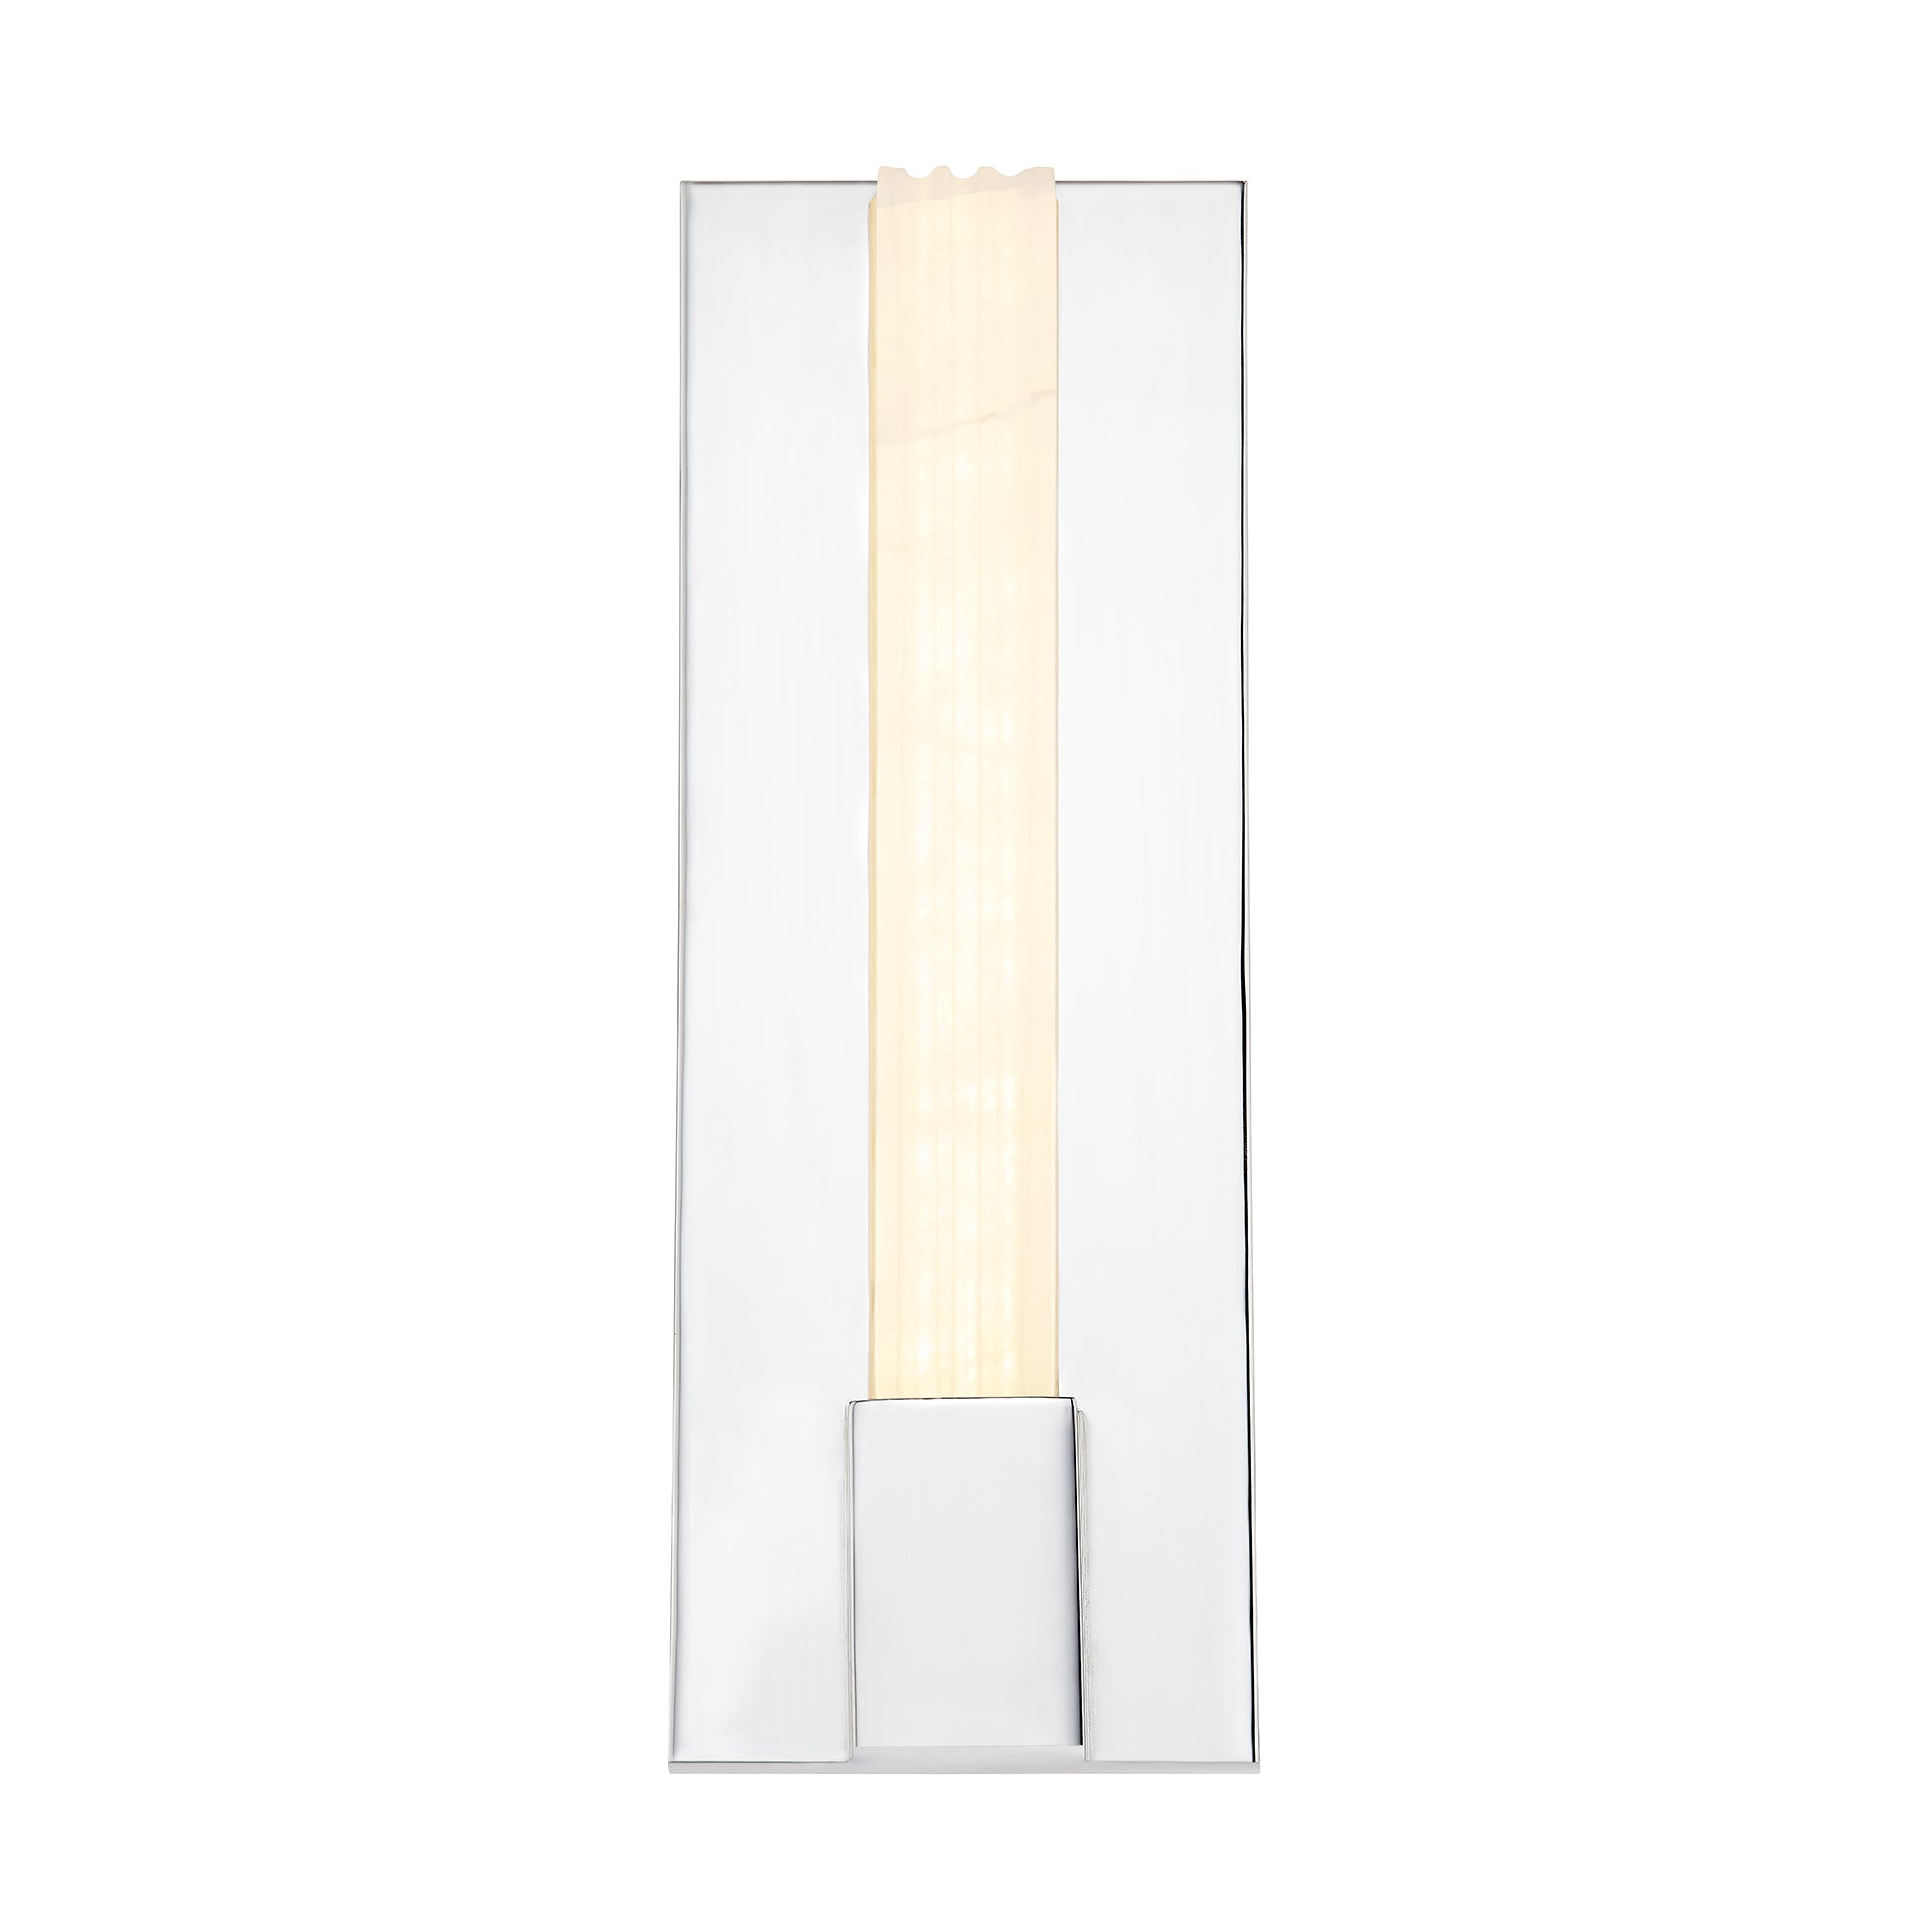 KISMET Bathroom wall sconce INTEGRATED LED - WV322114PNAR | ALORA